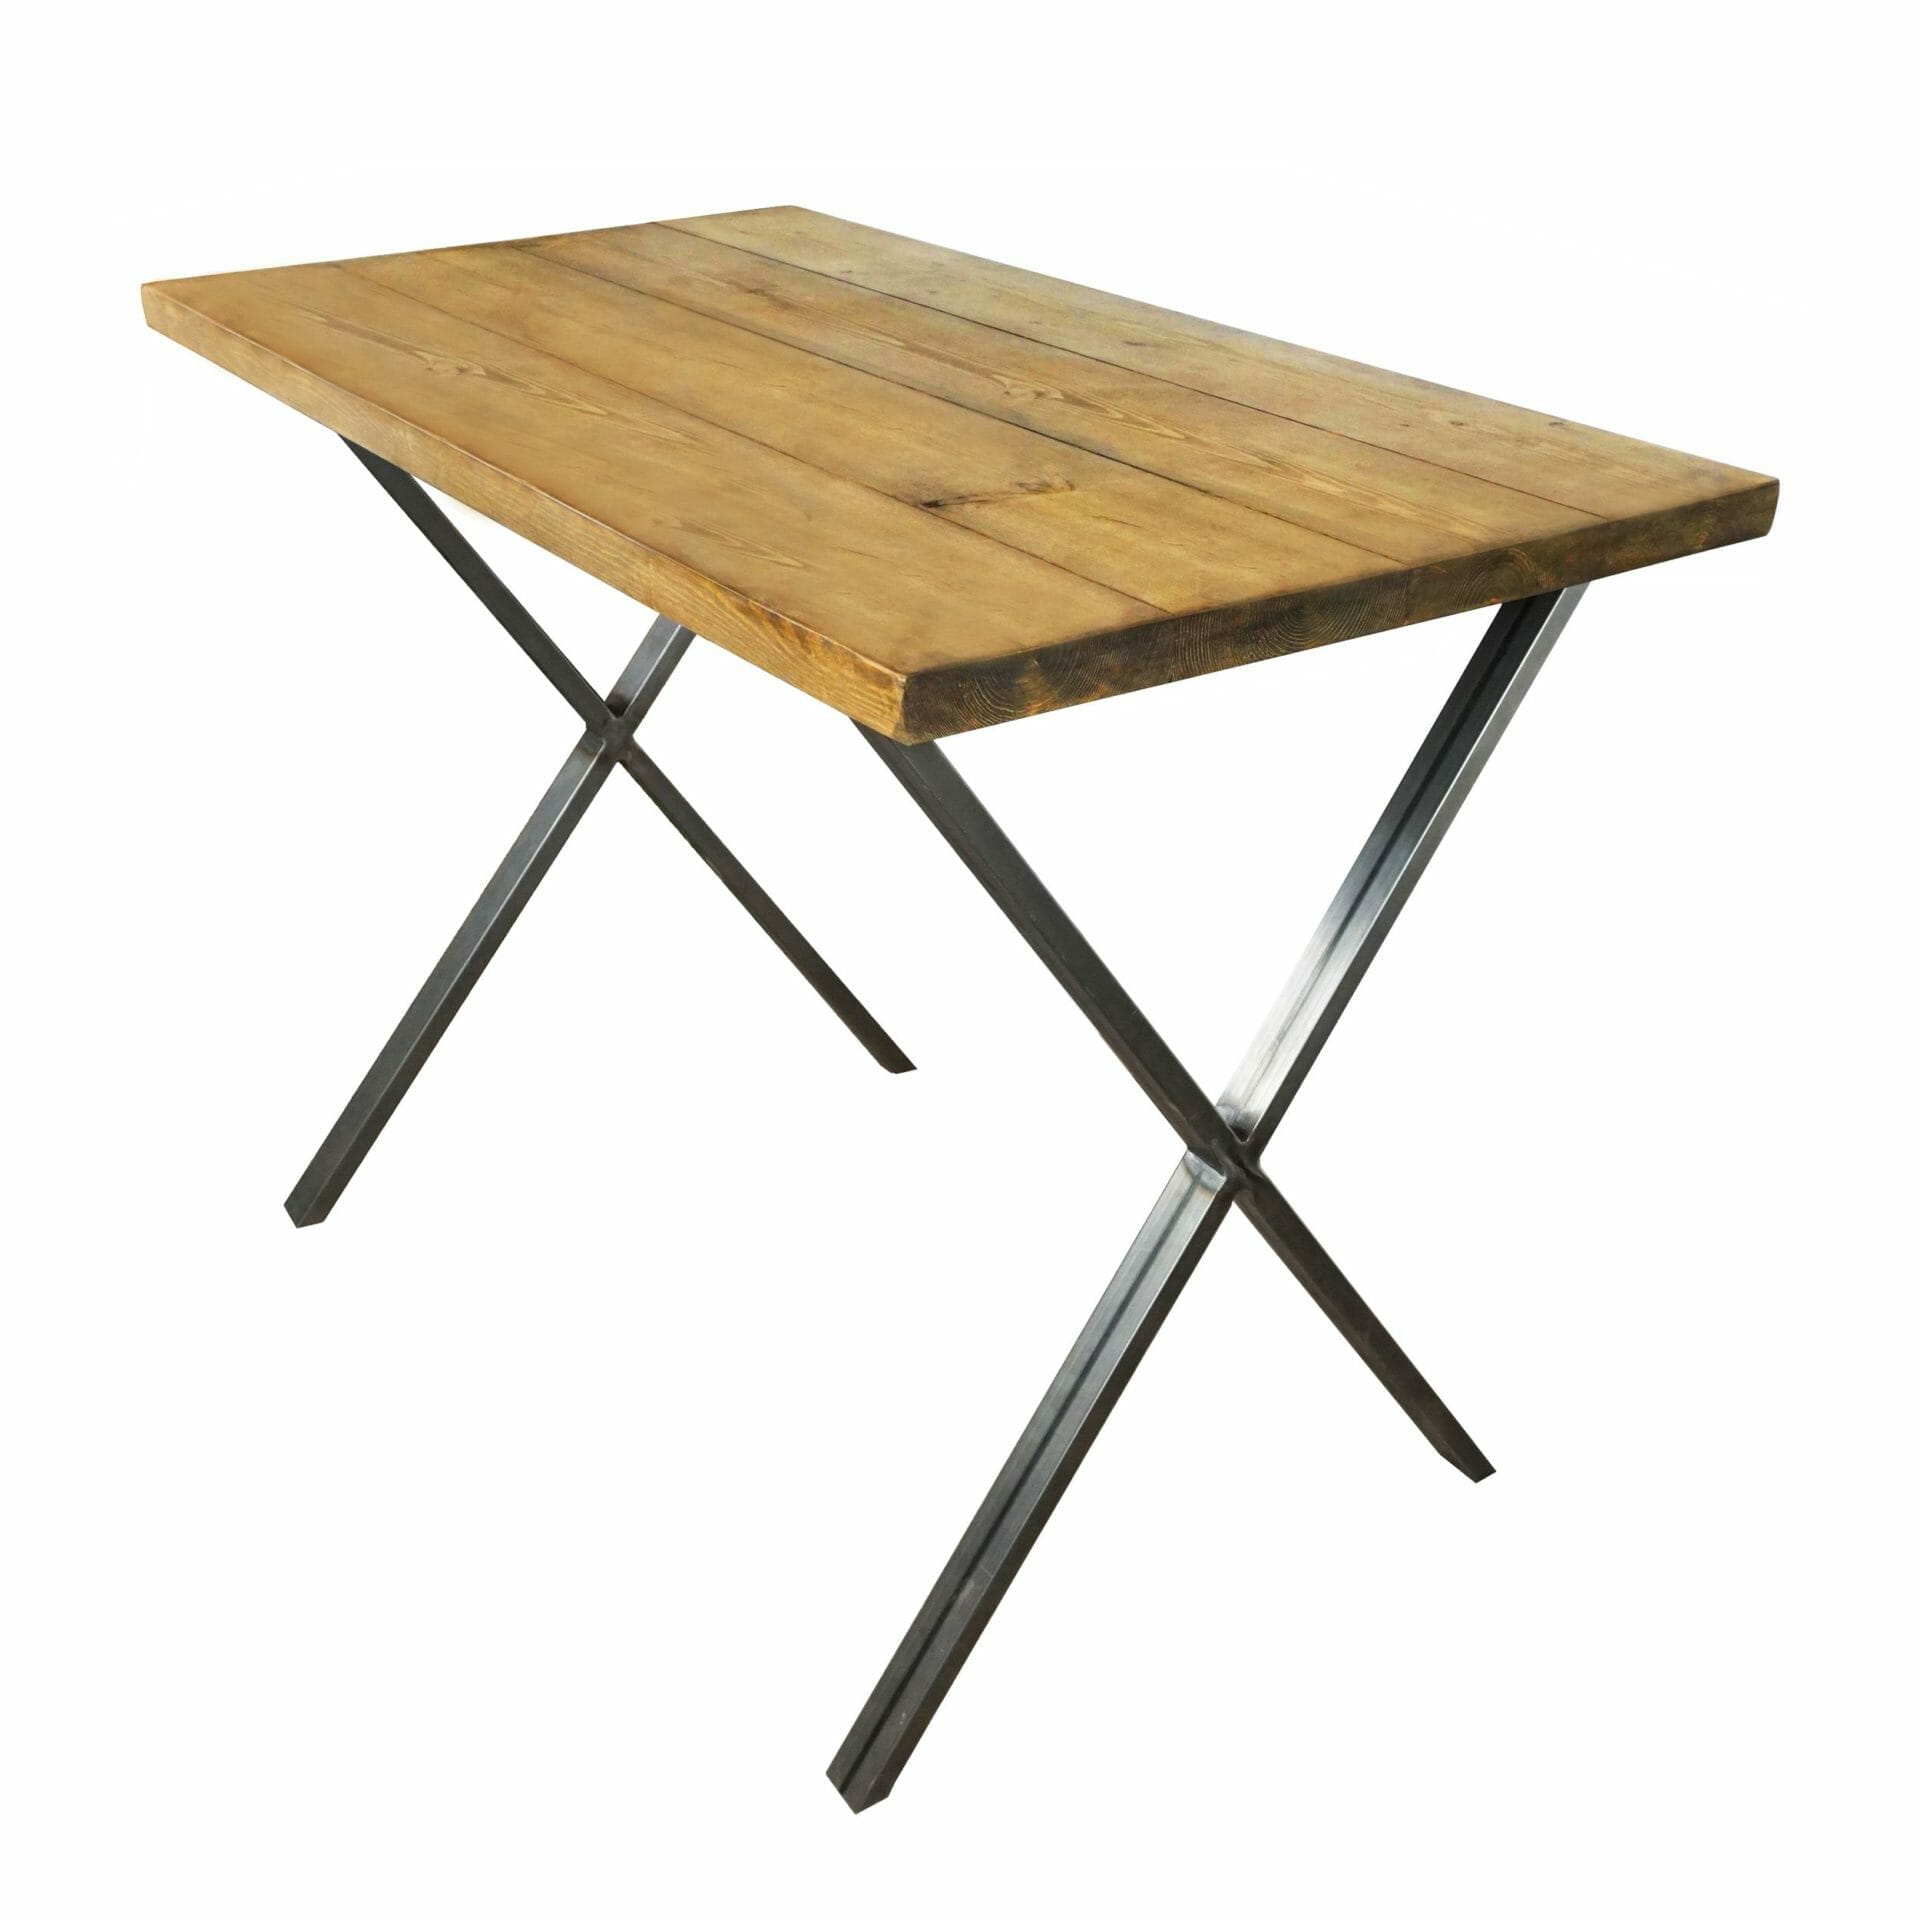 handmade reclaimed wood table with steel legs